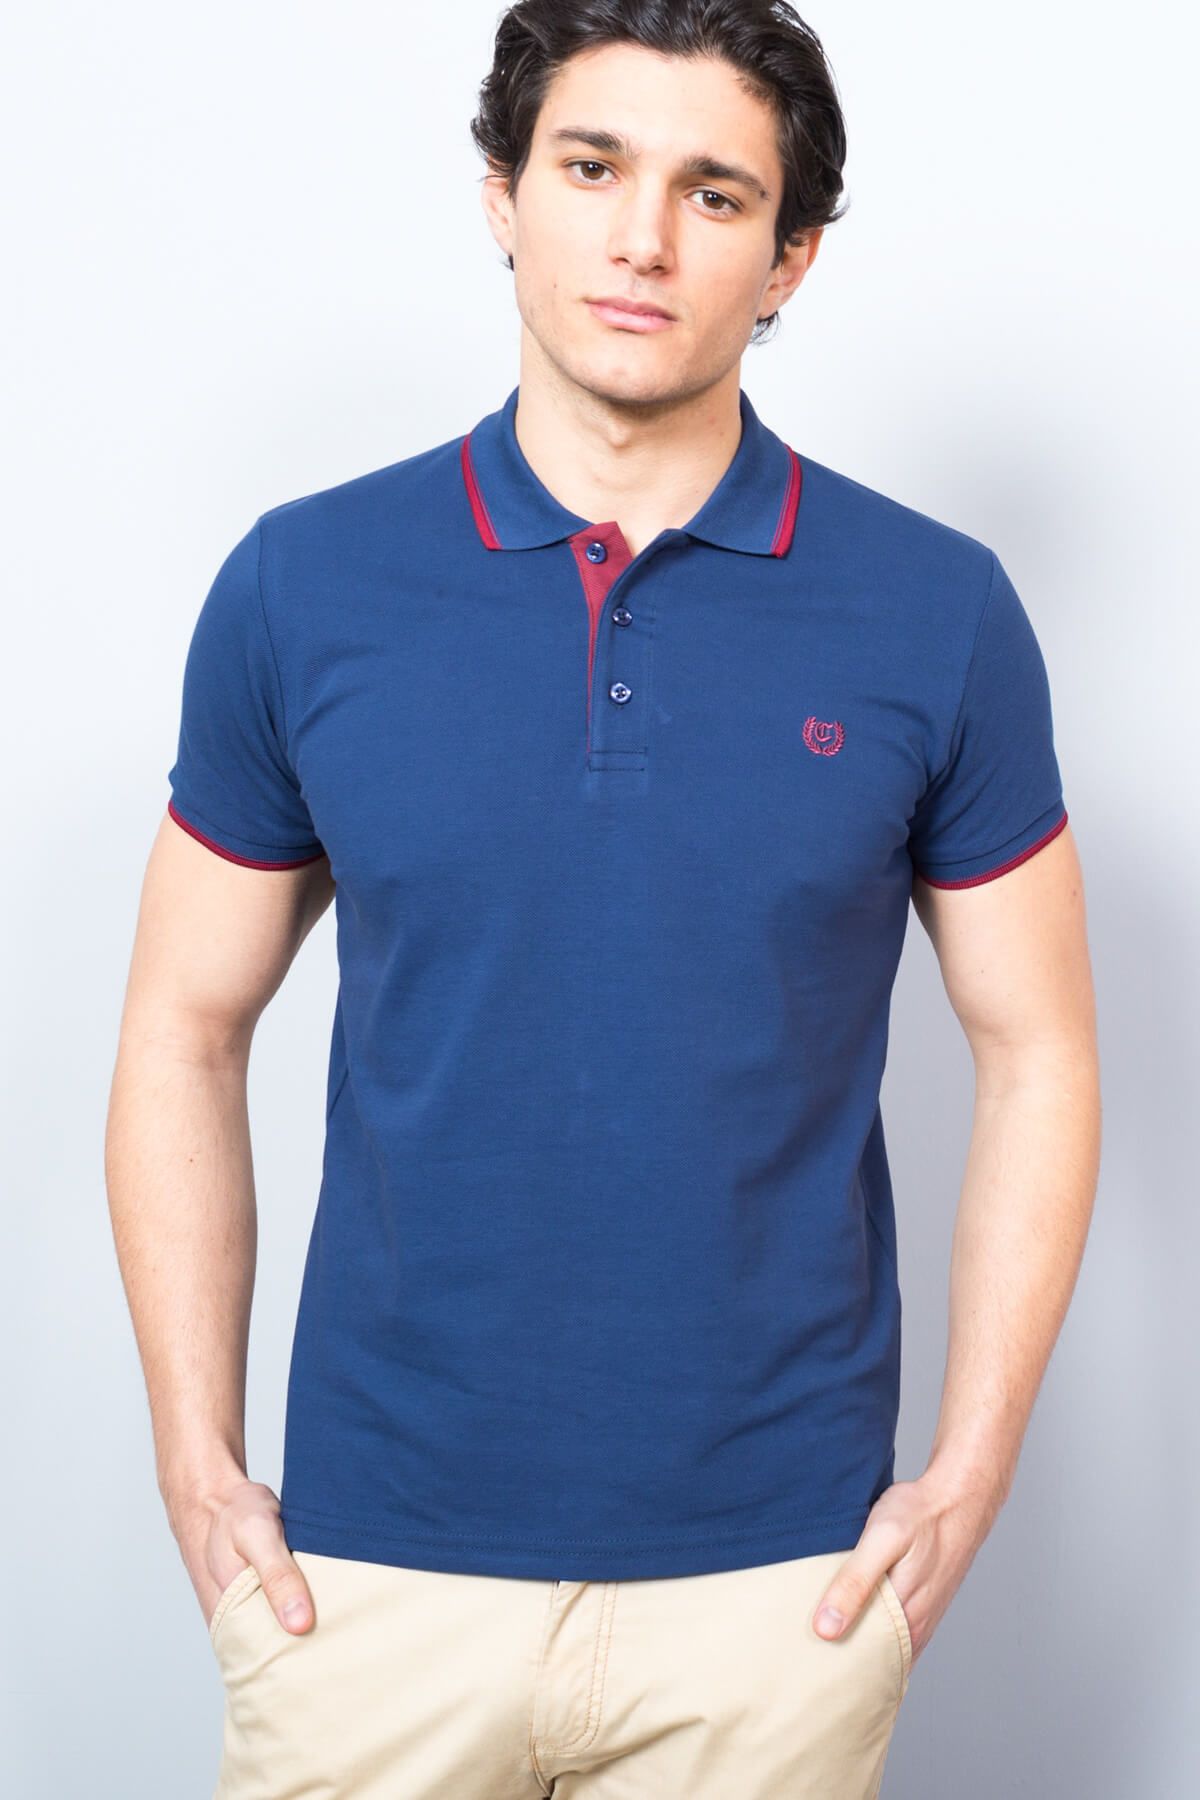 Adze Basic Düz Polo T-Shirt-1834